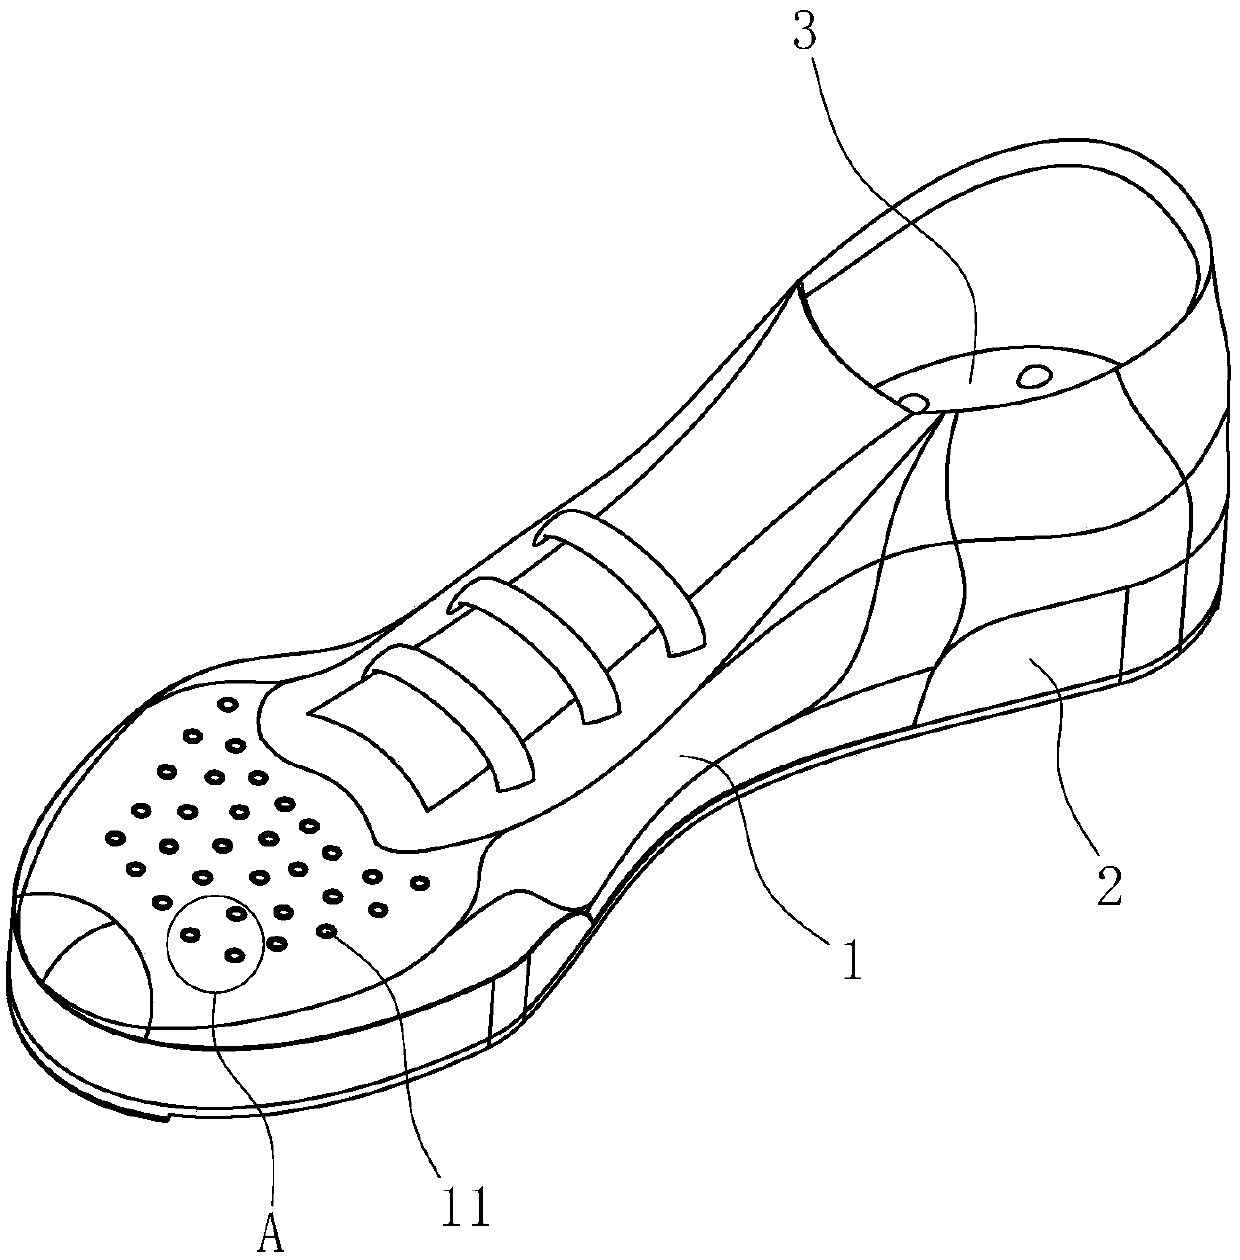 Self-adjusting breathable shoes